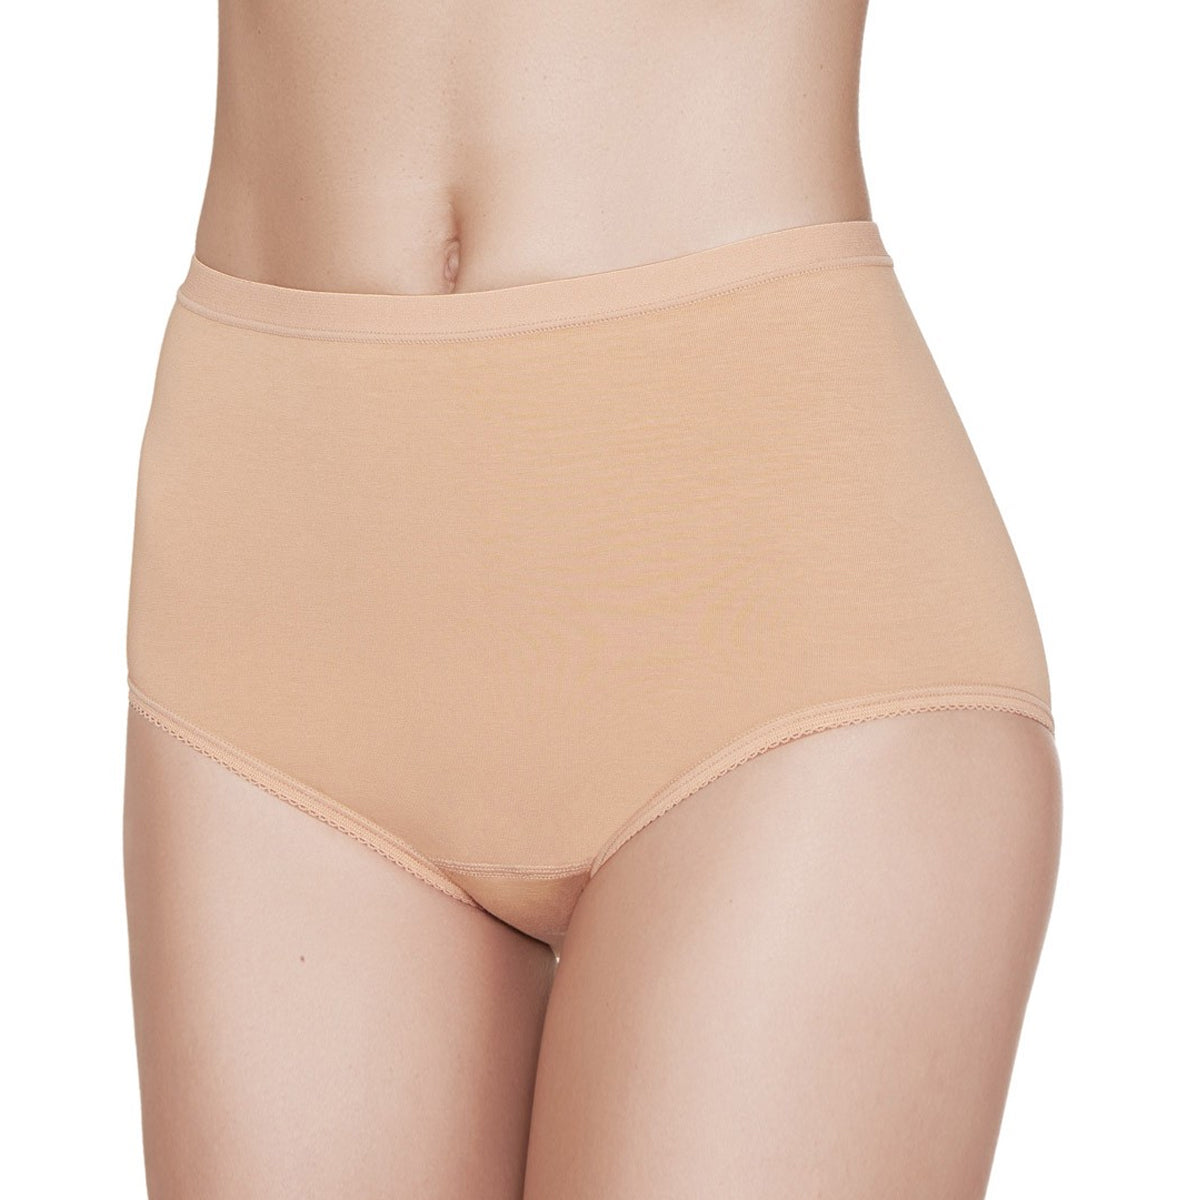 Buy BAICLOTHING Womens Non-Padded Underwear Lingerie Full Coverage